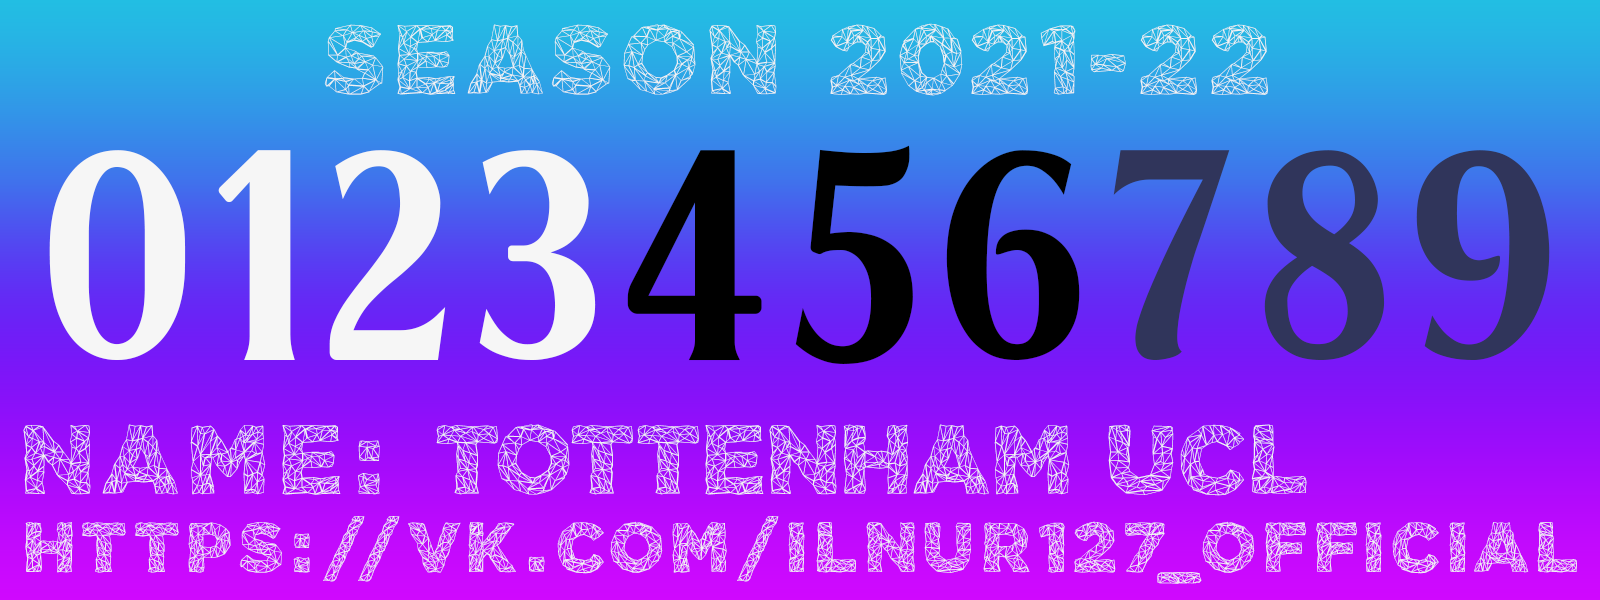 Tottenham UCL 2021-22 (kitnumbers).png